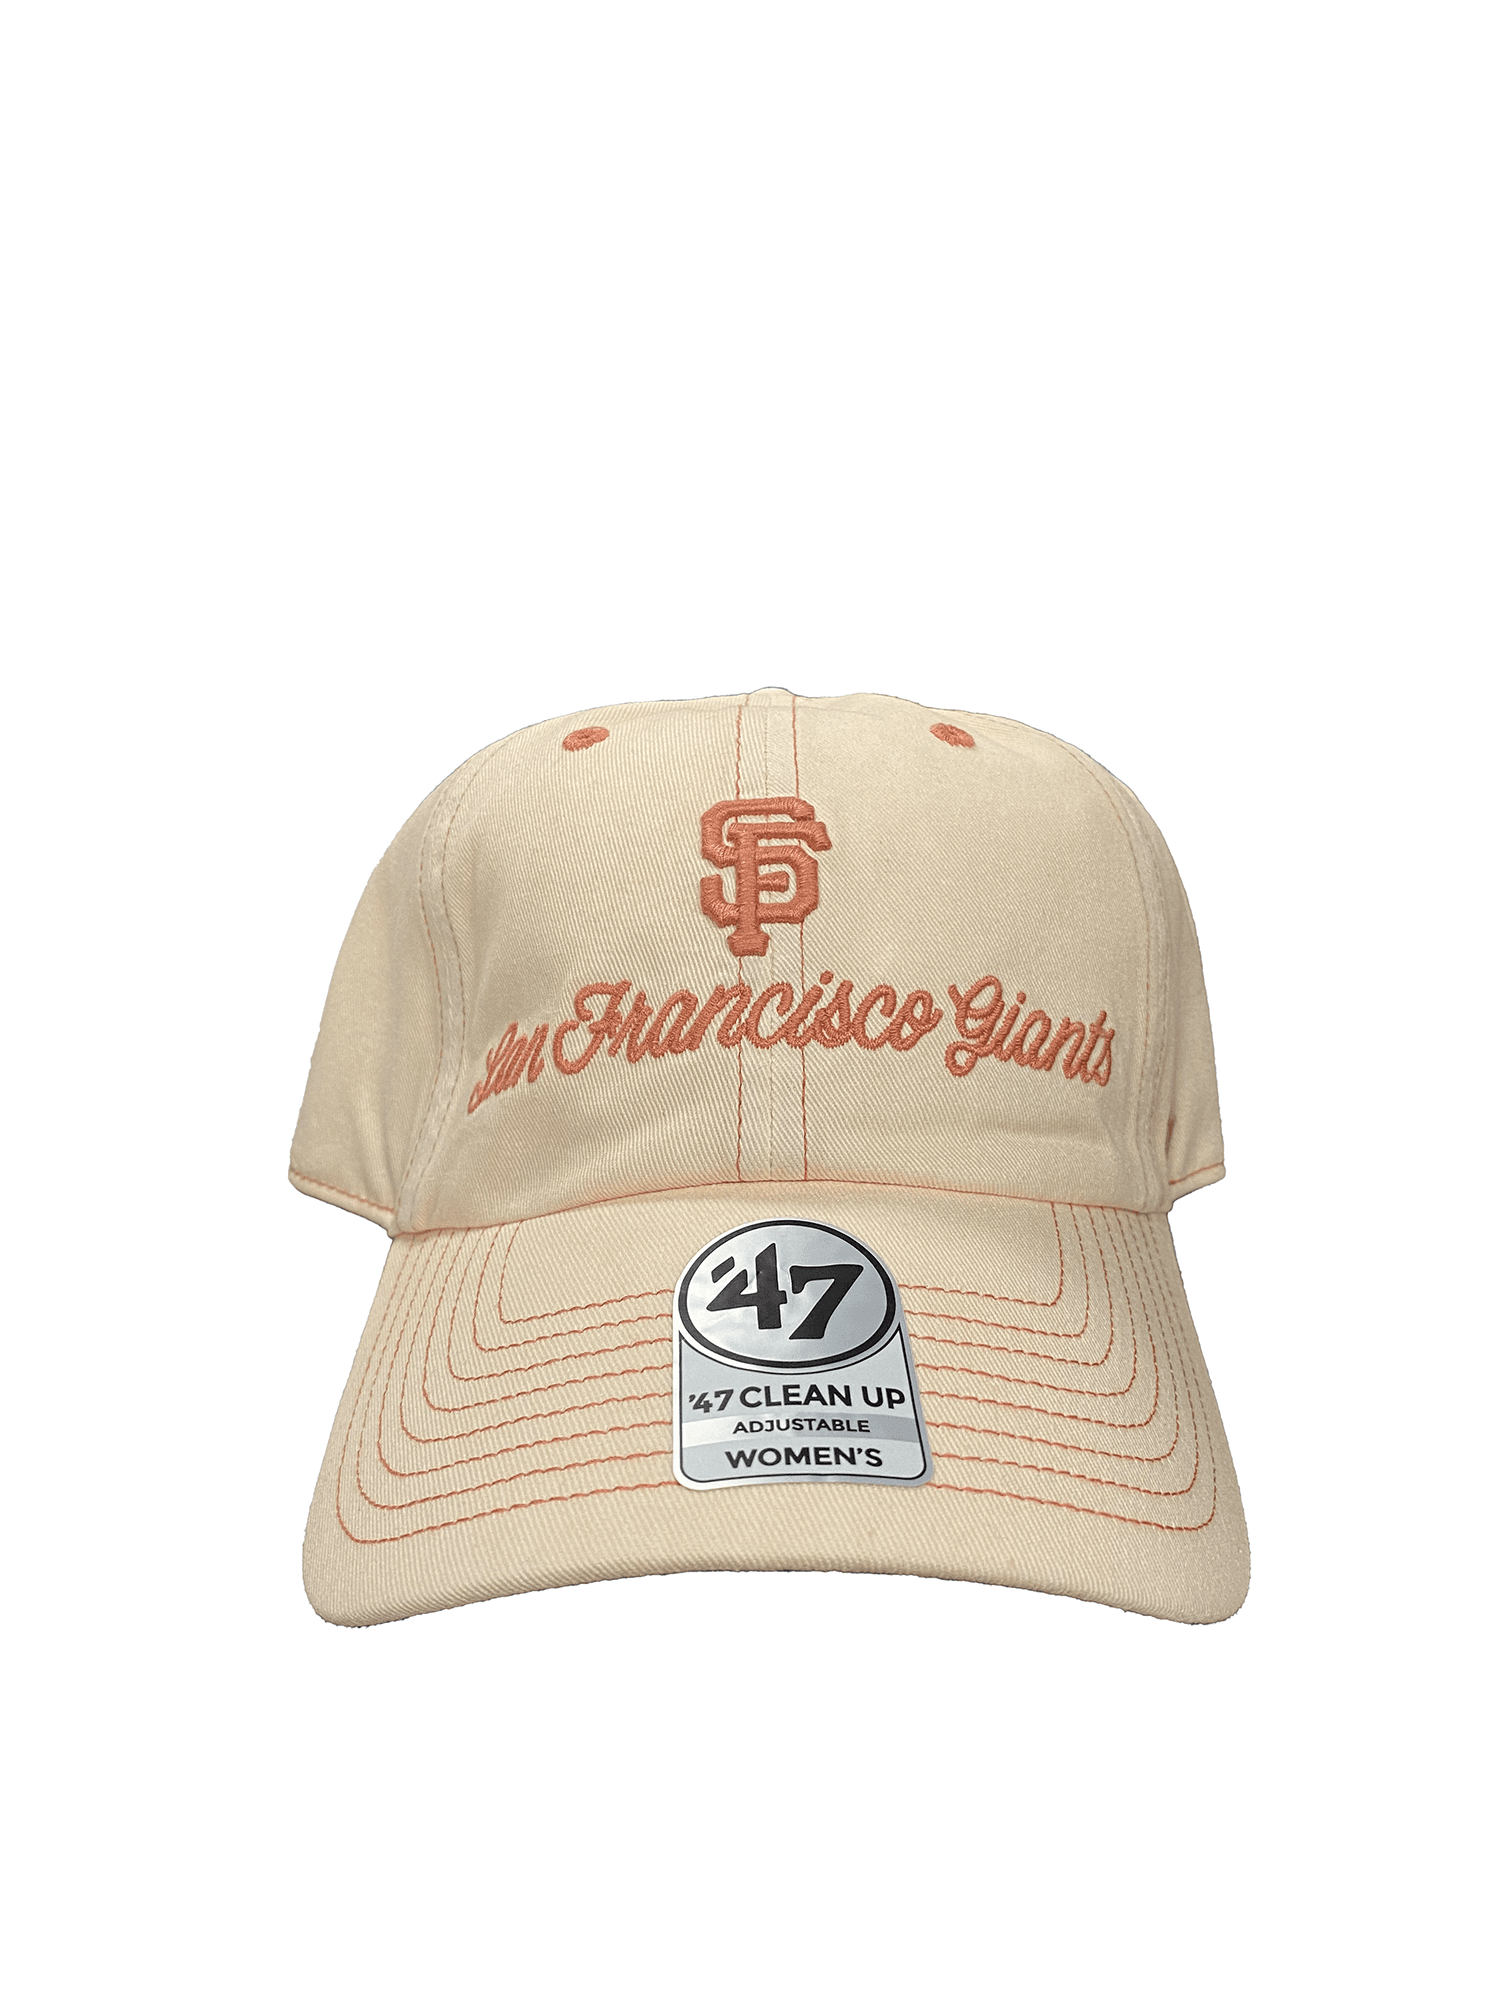 San Francisco Giants Women's Adjustable 47 Brand Clean Up Hat - Nectar Haze